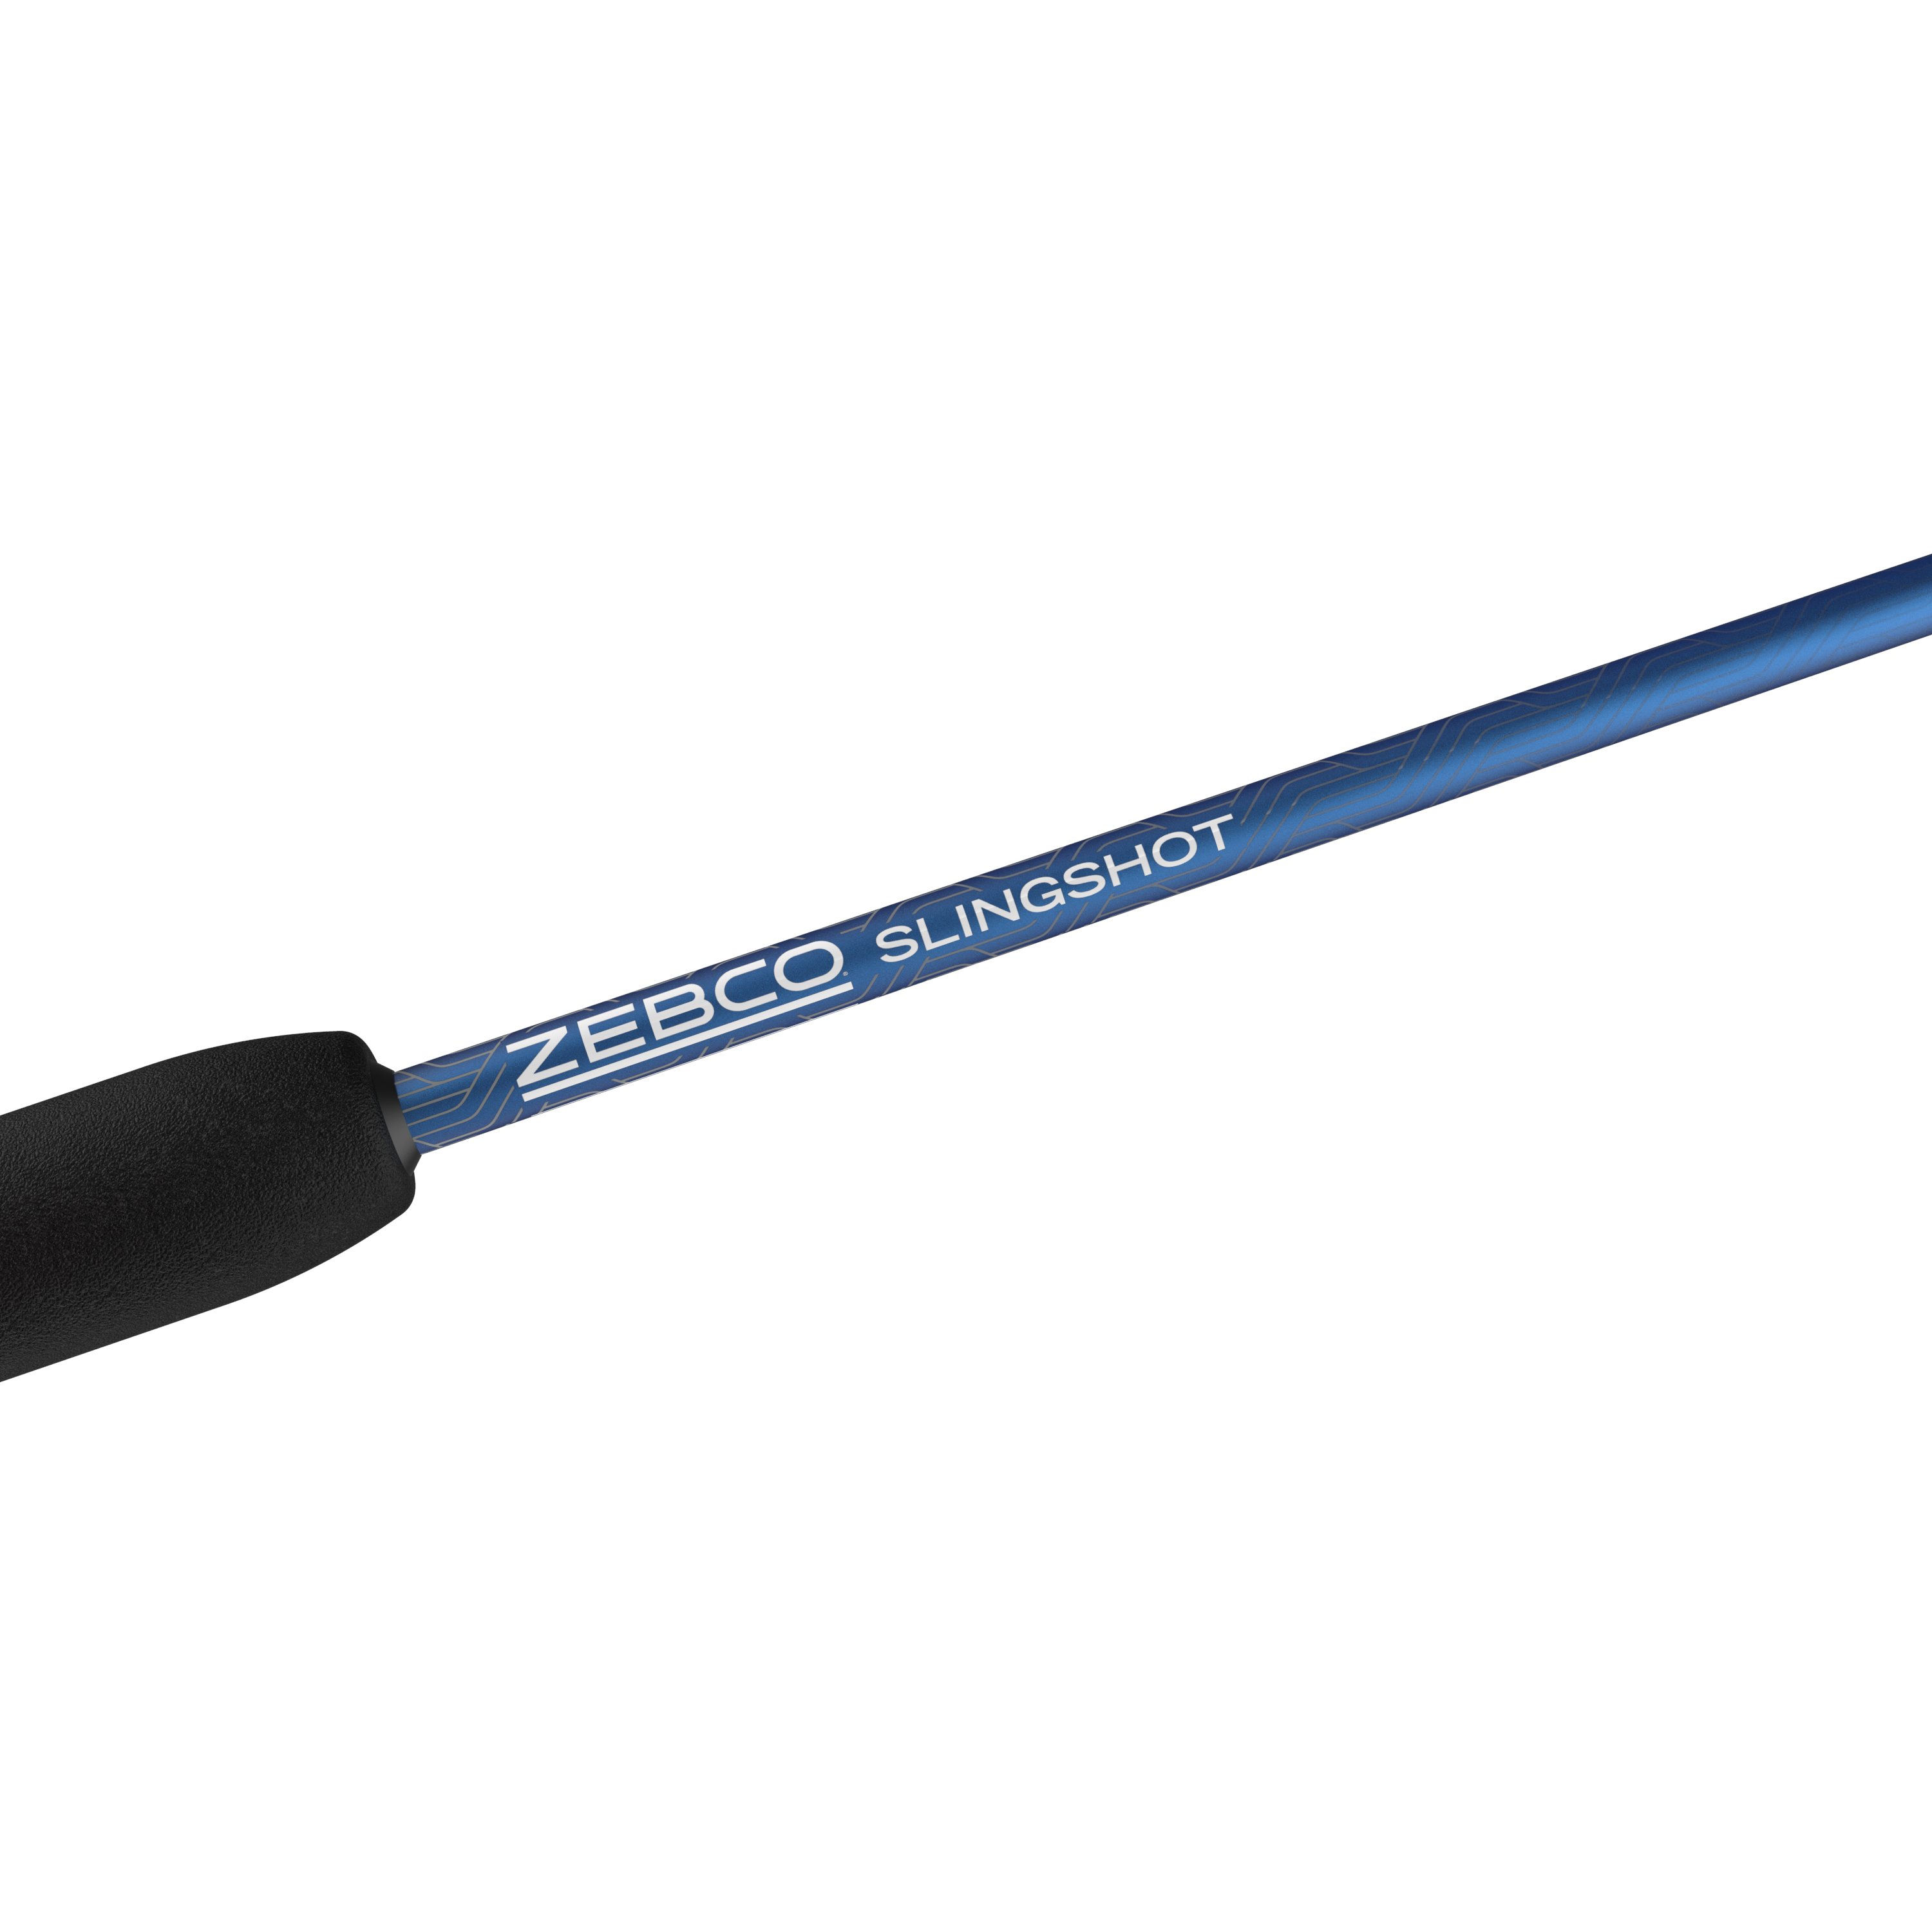 Zebco Slingshot Spincast Reel and Fishing Rod Combo, Blue - image 5 of 6